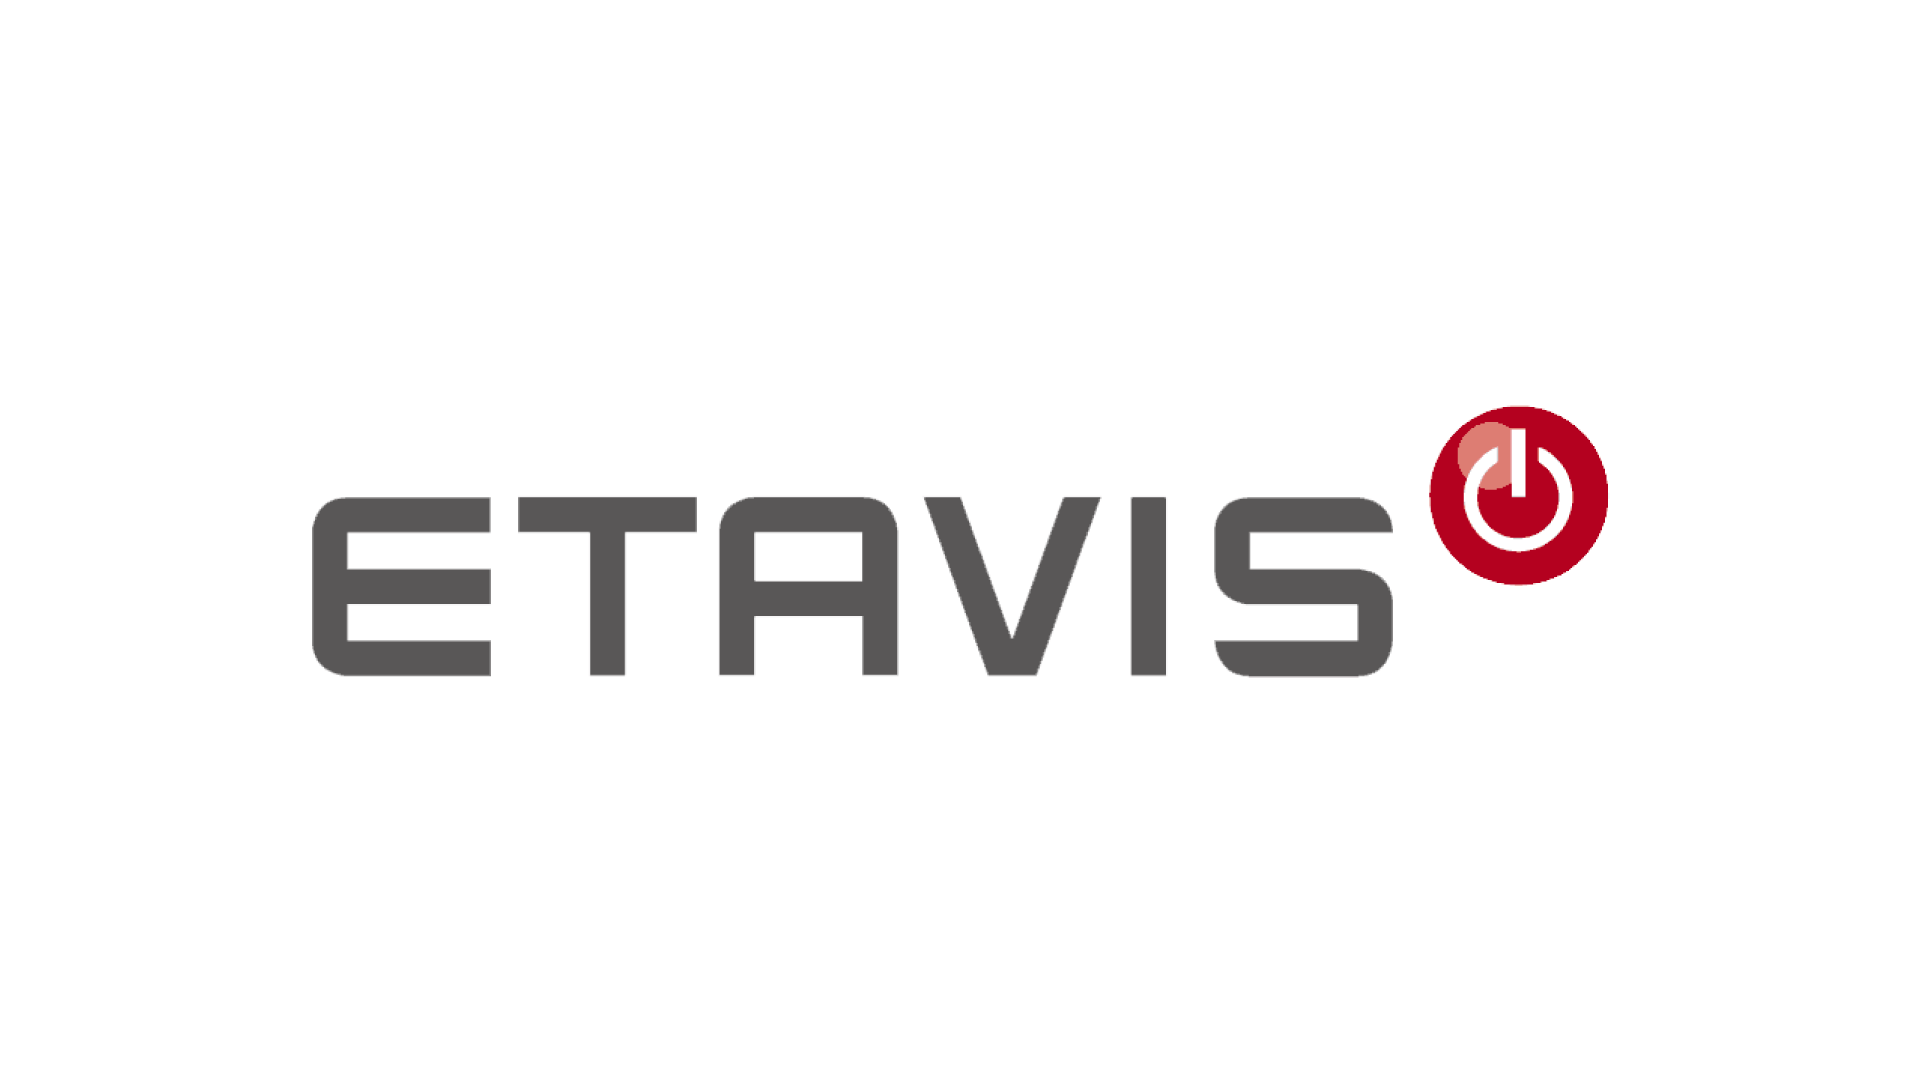 Logo ETAVIS